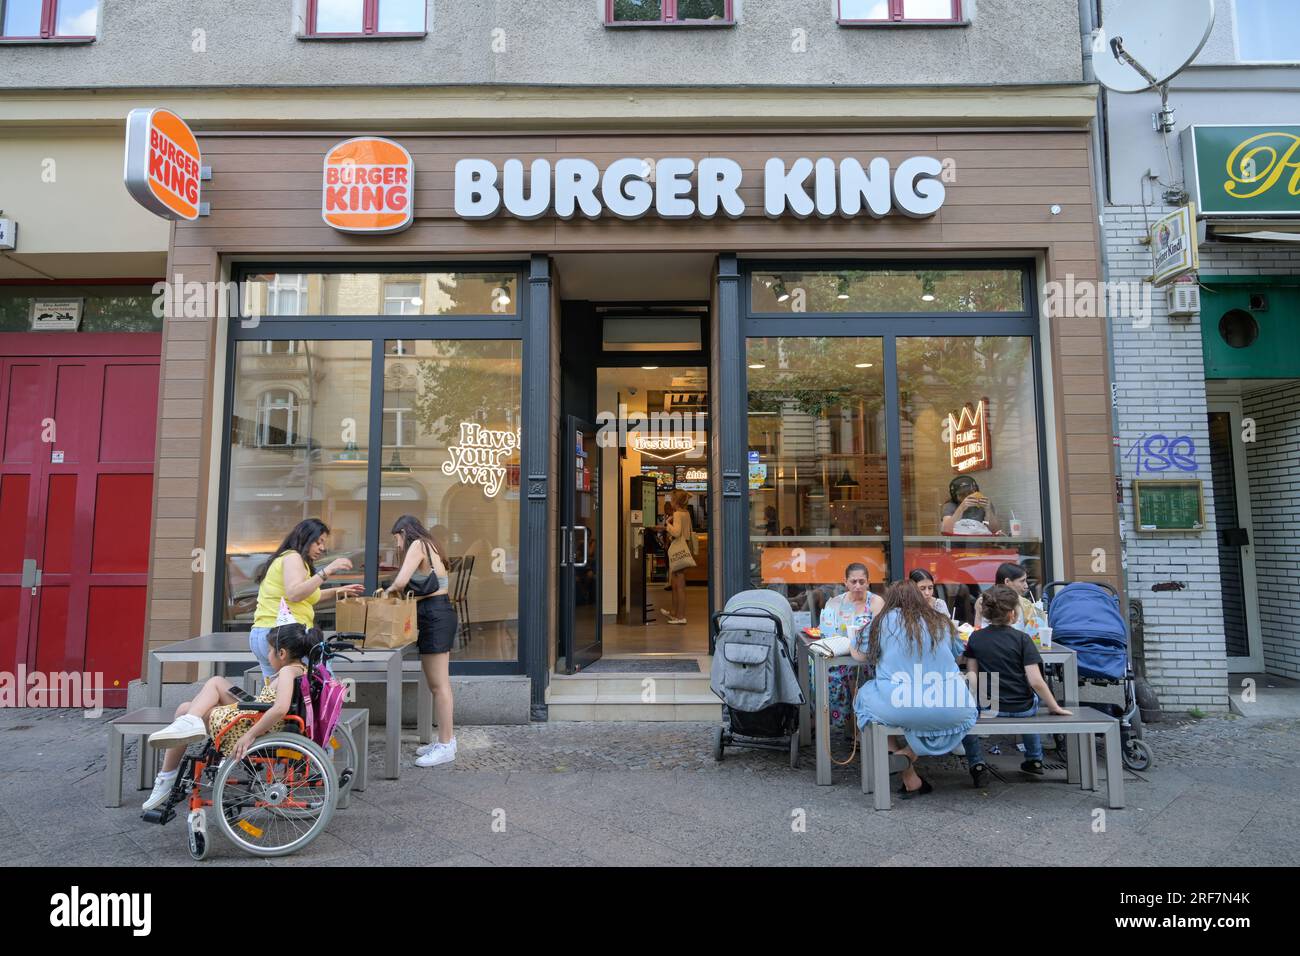 Burger King Potsdamer Stra 223 e Tiergarten Mitte Berlin Deutschland Local Caption 